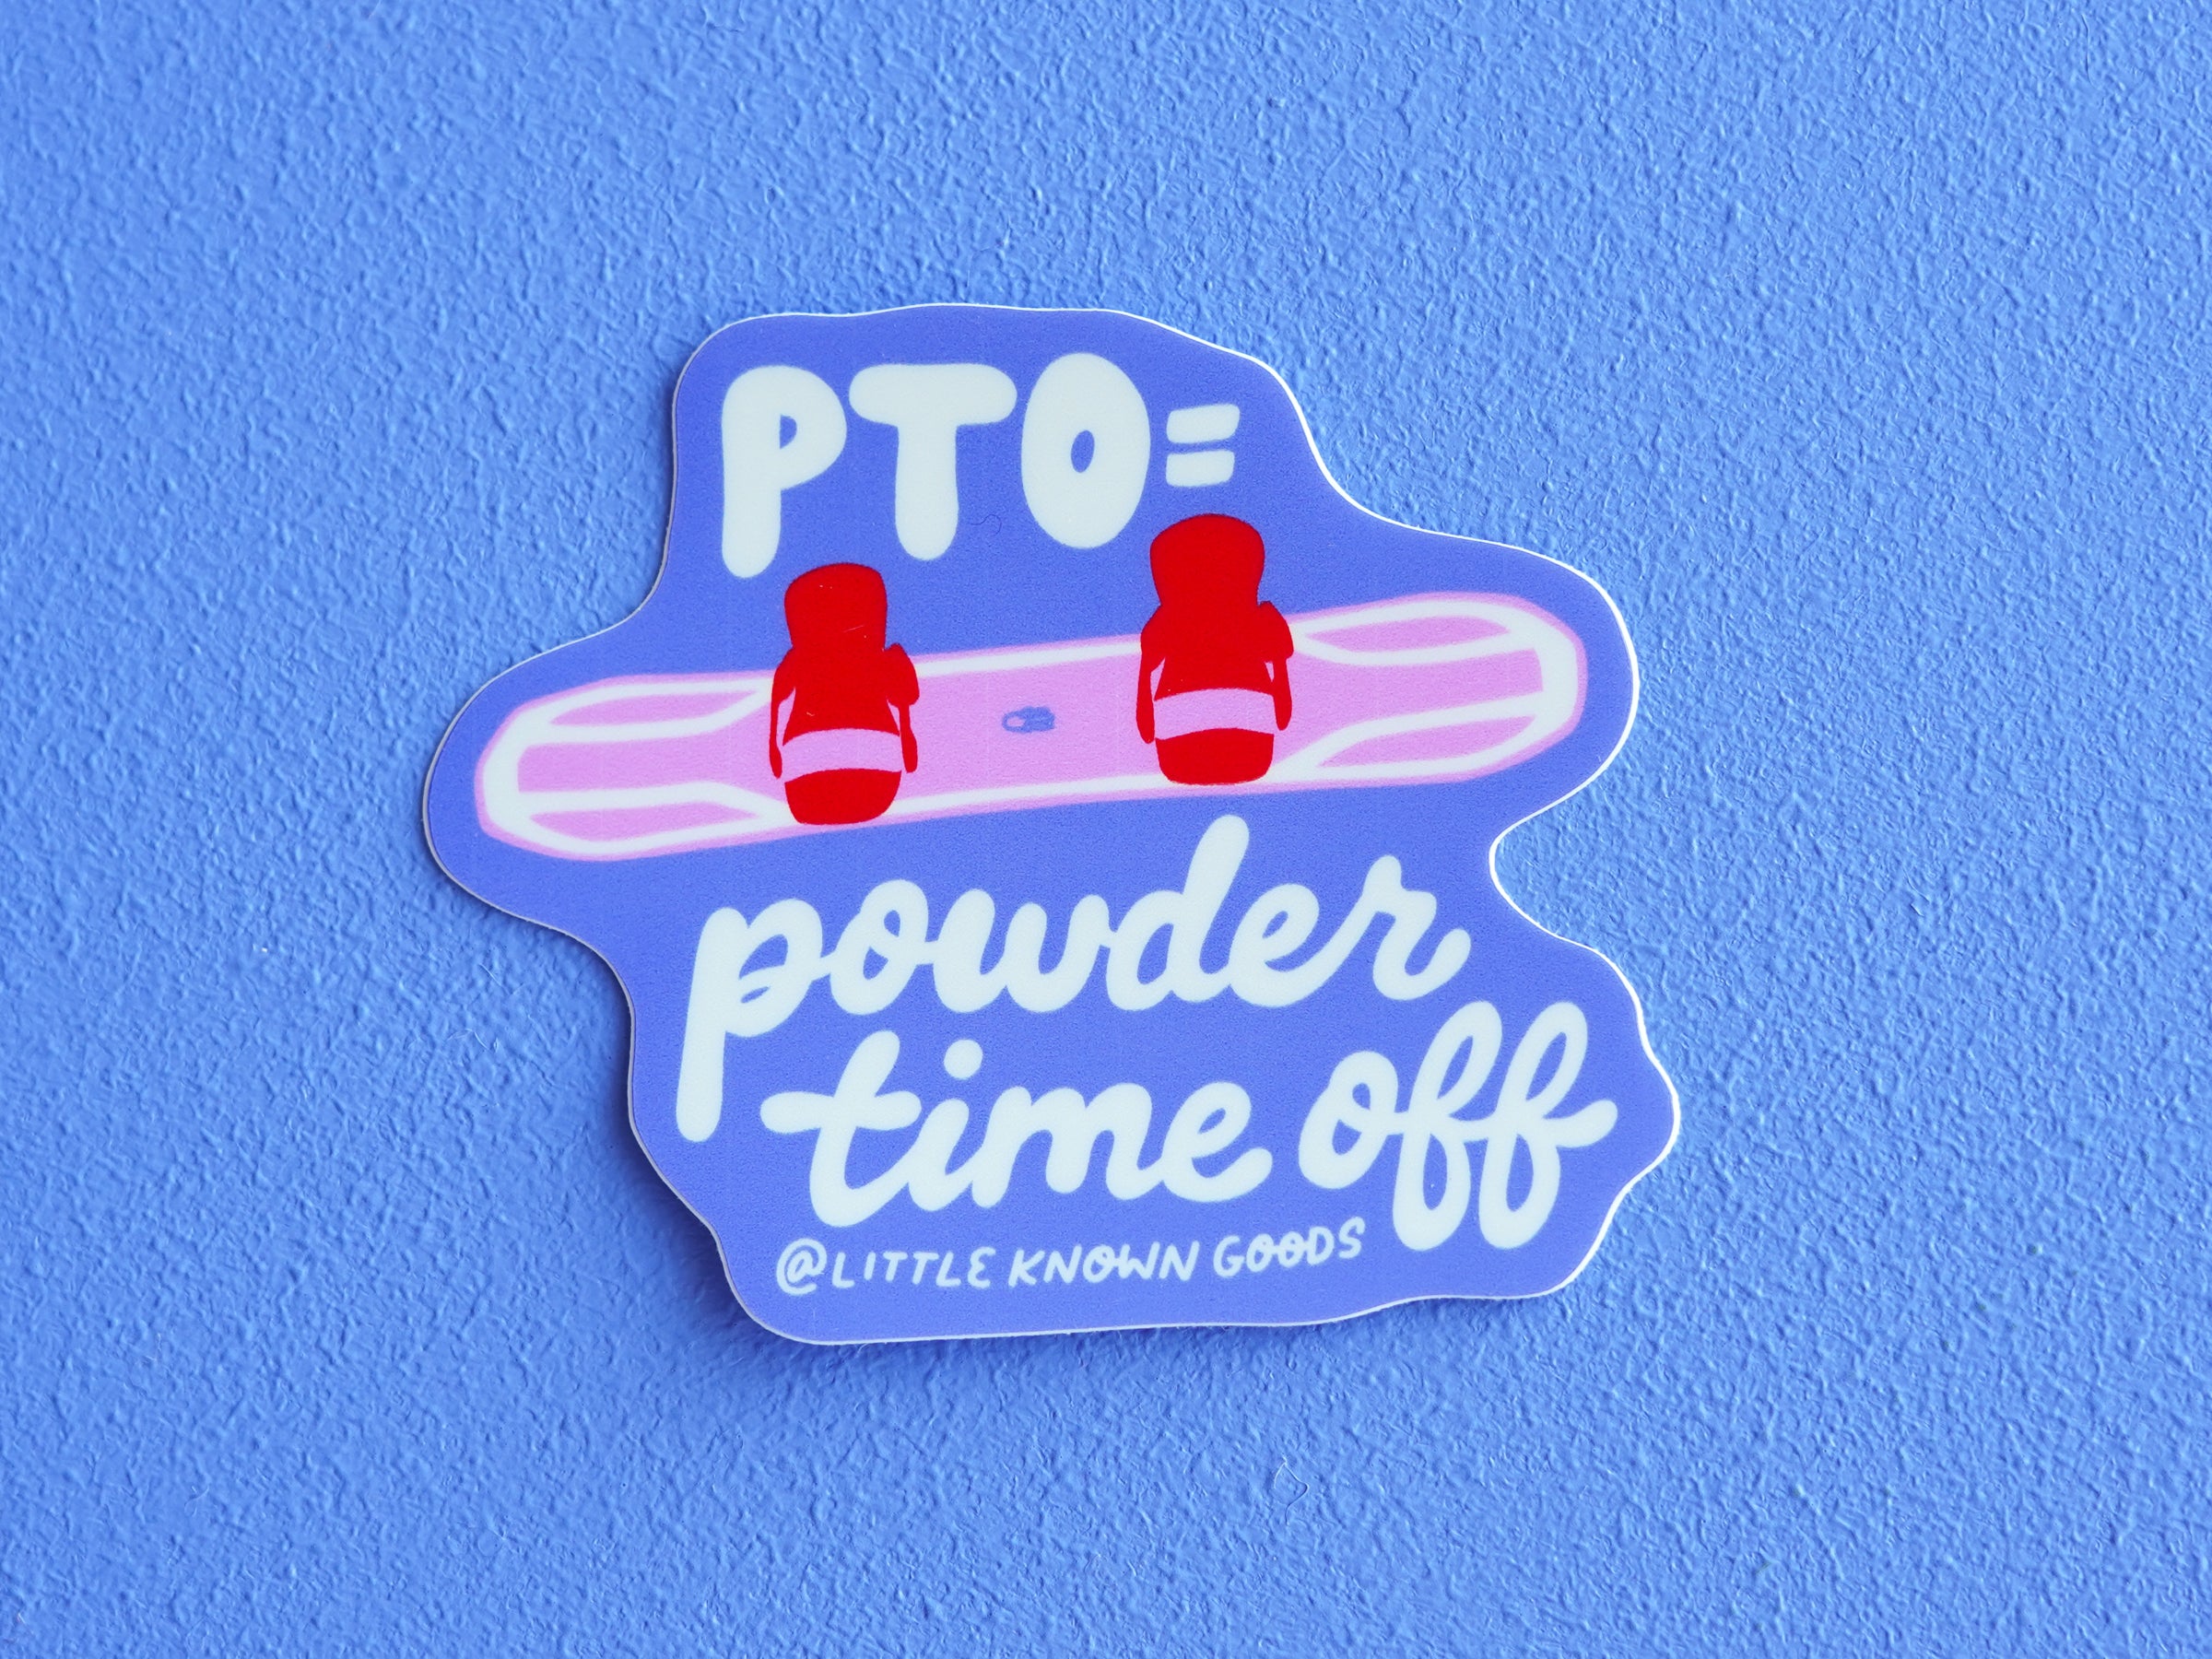 Powder Time Off Sticker